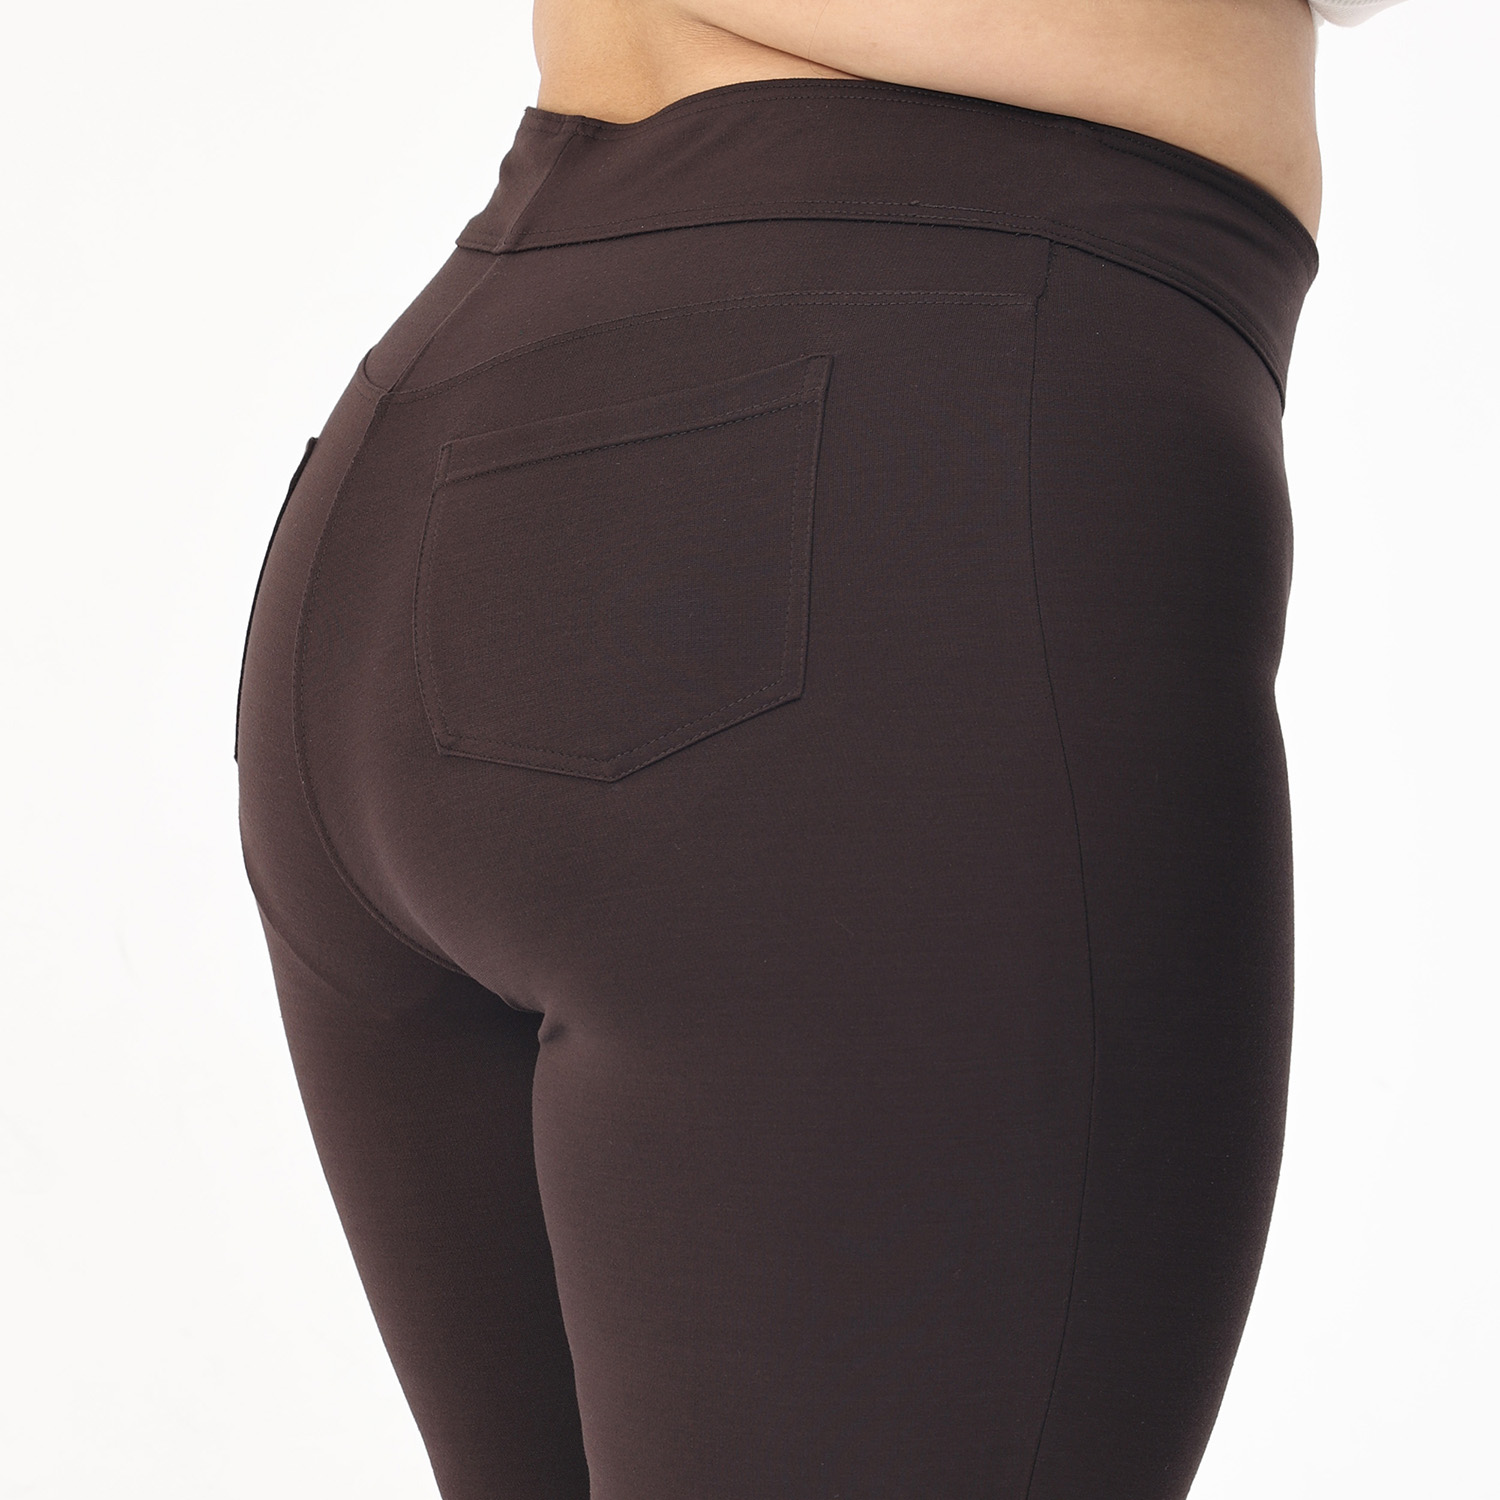 Brown pant women - Plus size - Straight leg 2 back pockets - Belore Slims